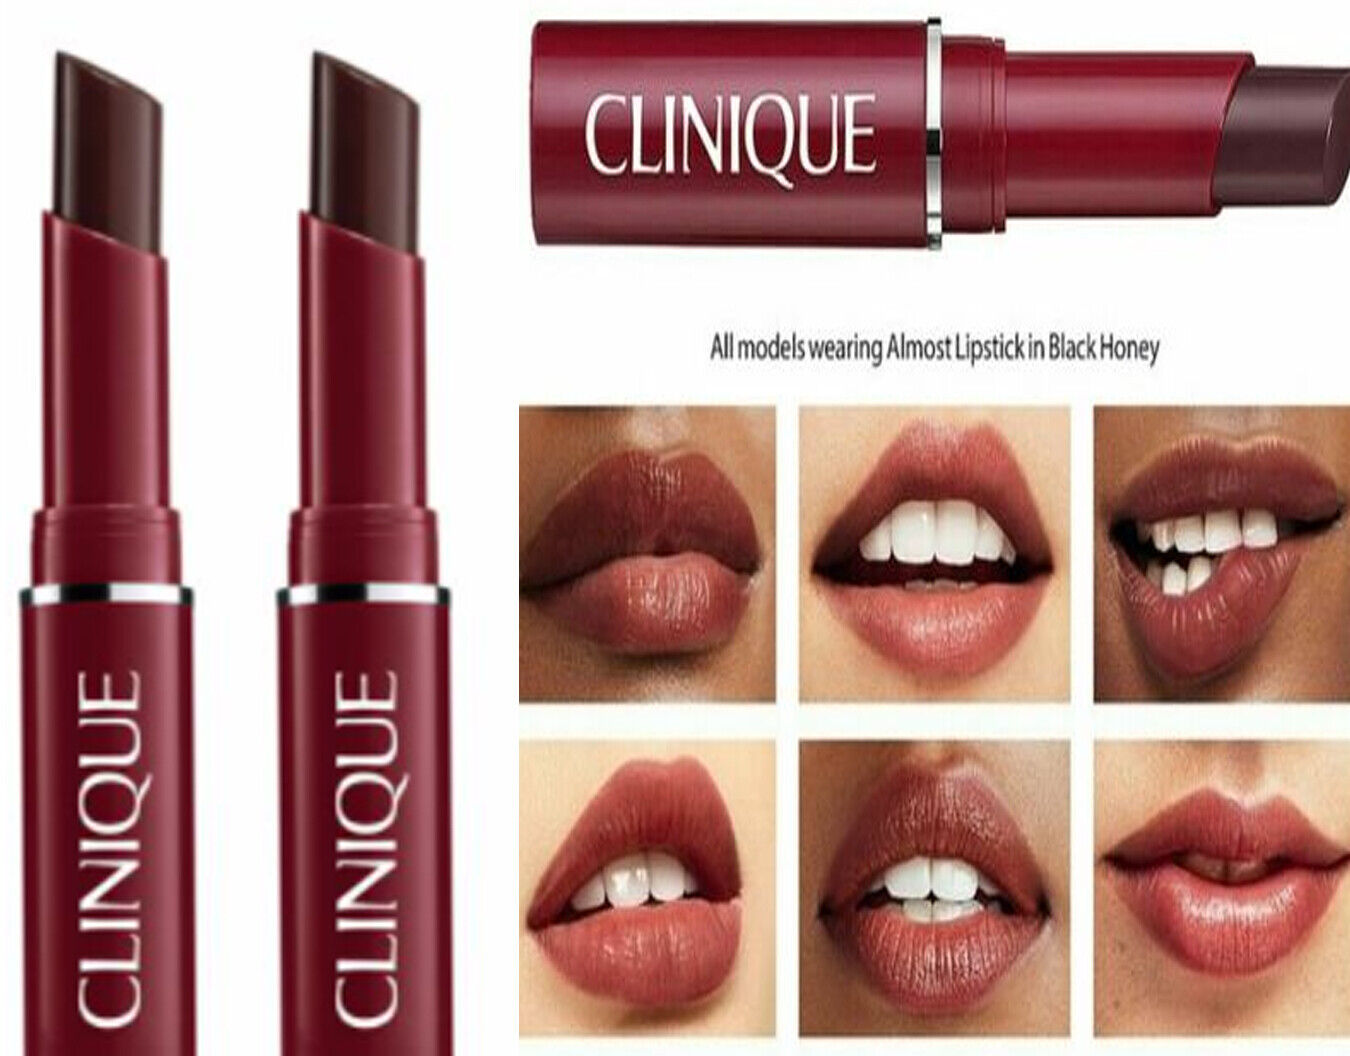 Clinique black honey lipstick